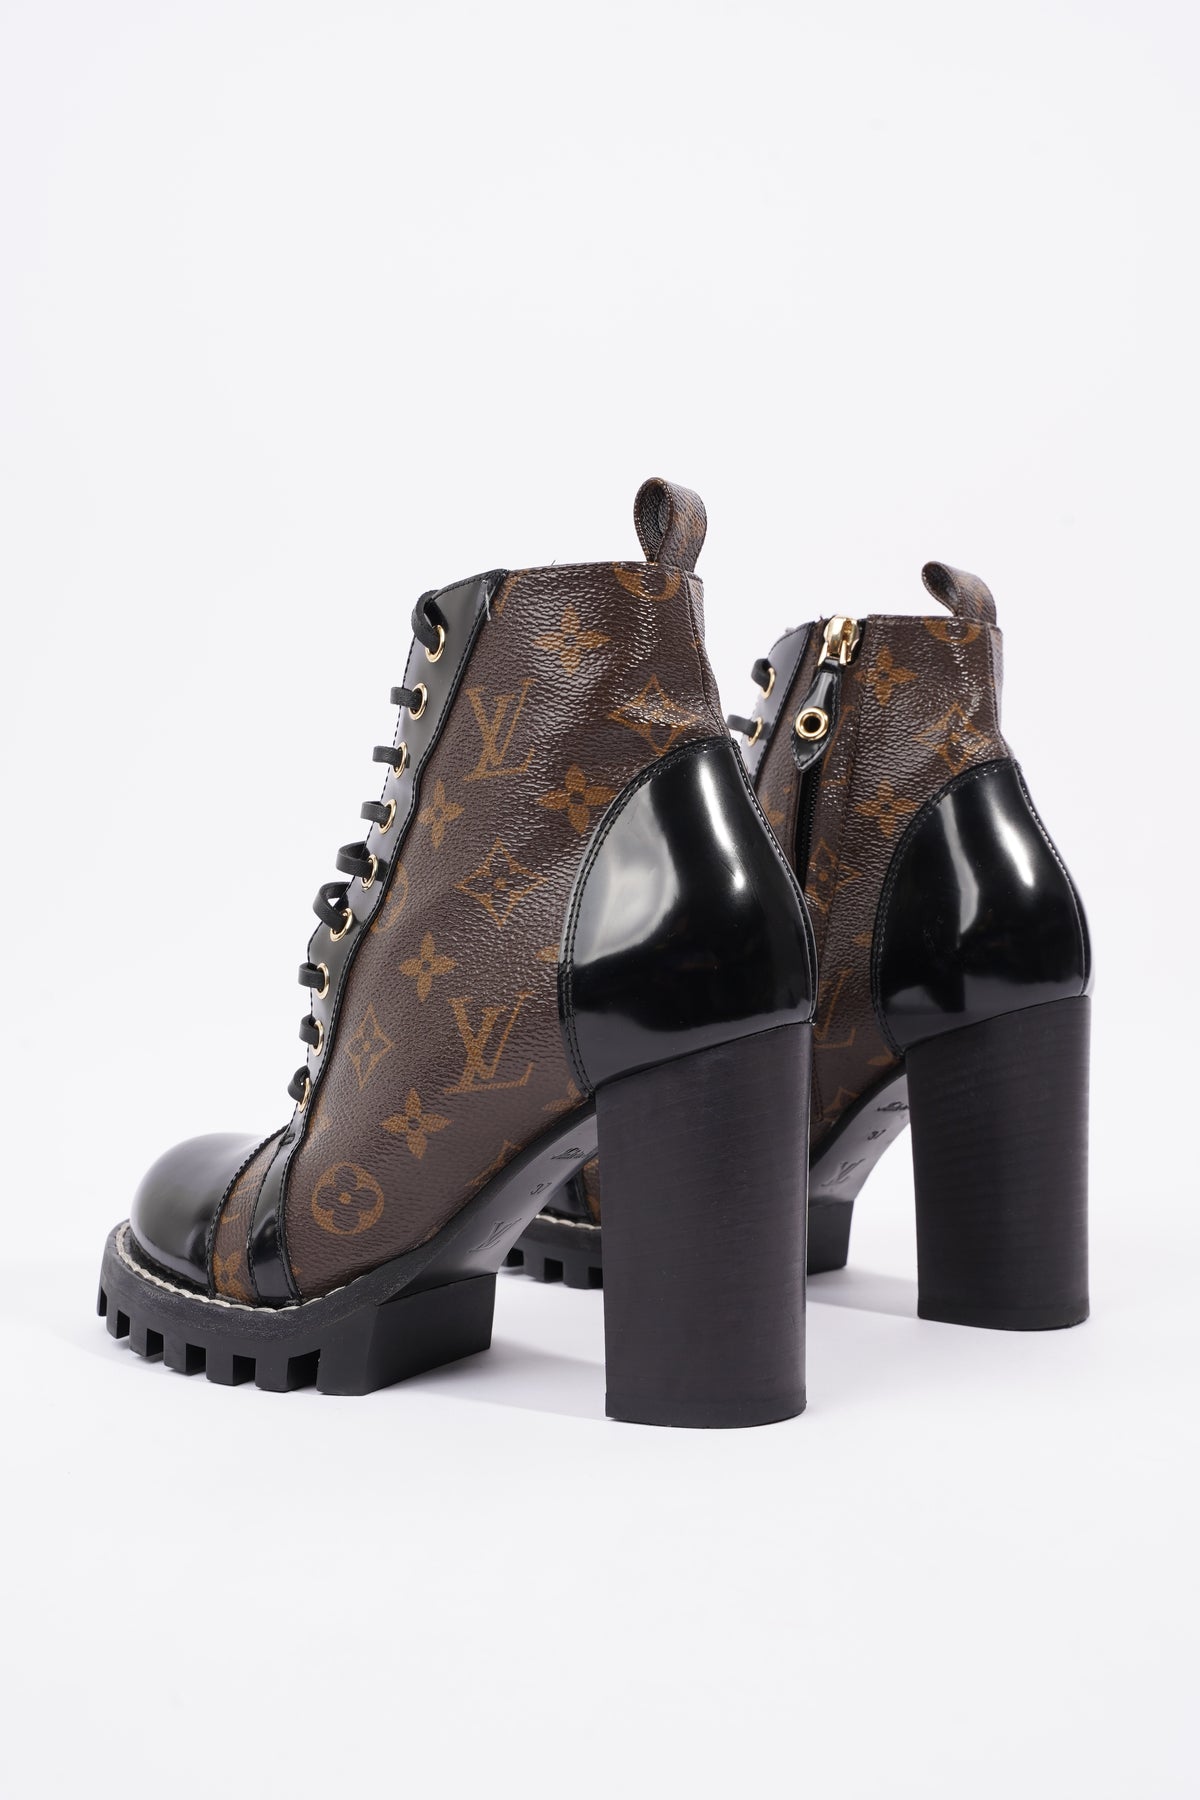 Star trail leather sandals Louis Vuitton Black size 38 EU in